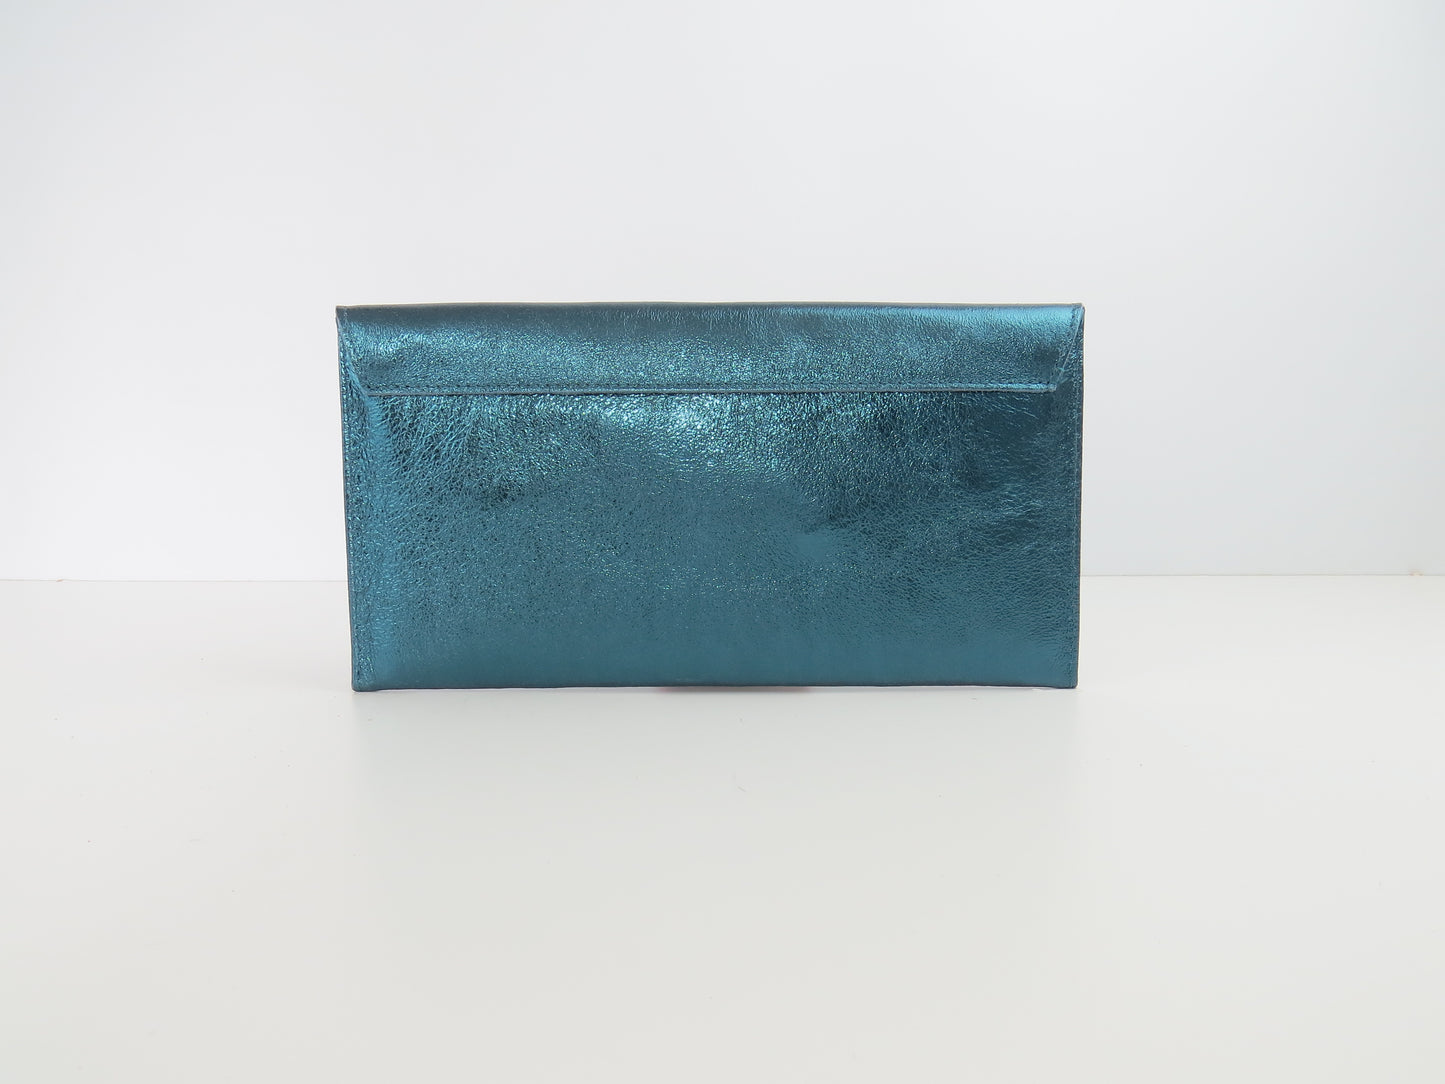 Metallic Teal Blue Cyan Blue Envelope Clutch Bag